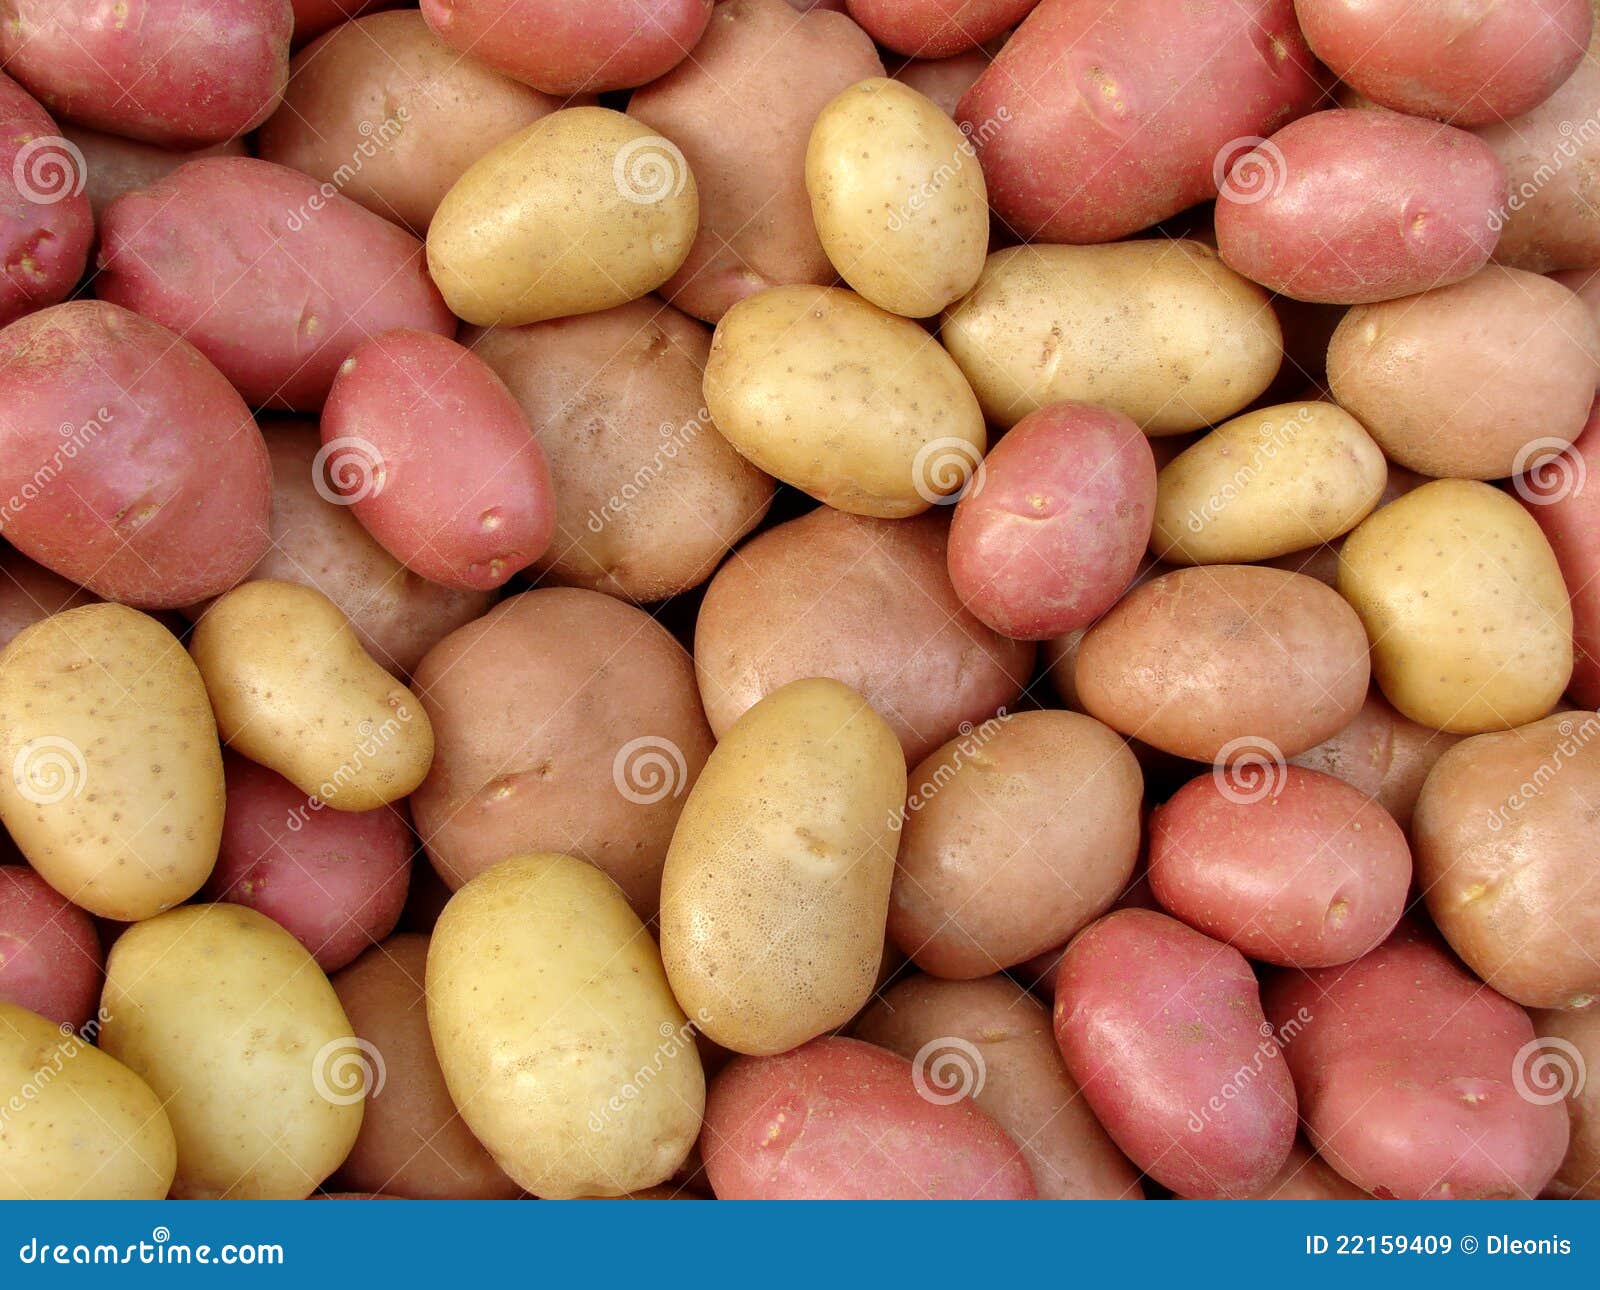 harvested potato tubers